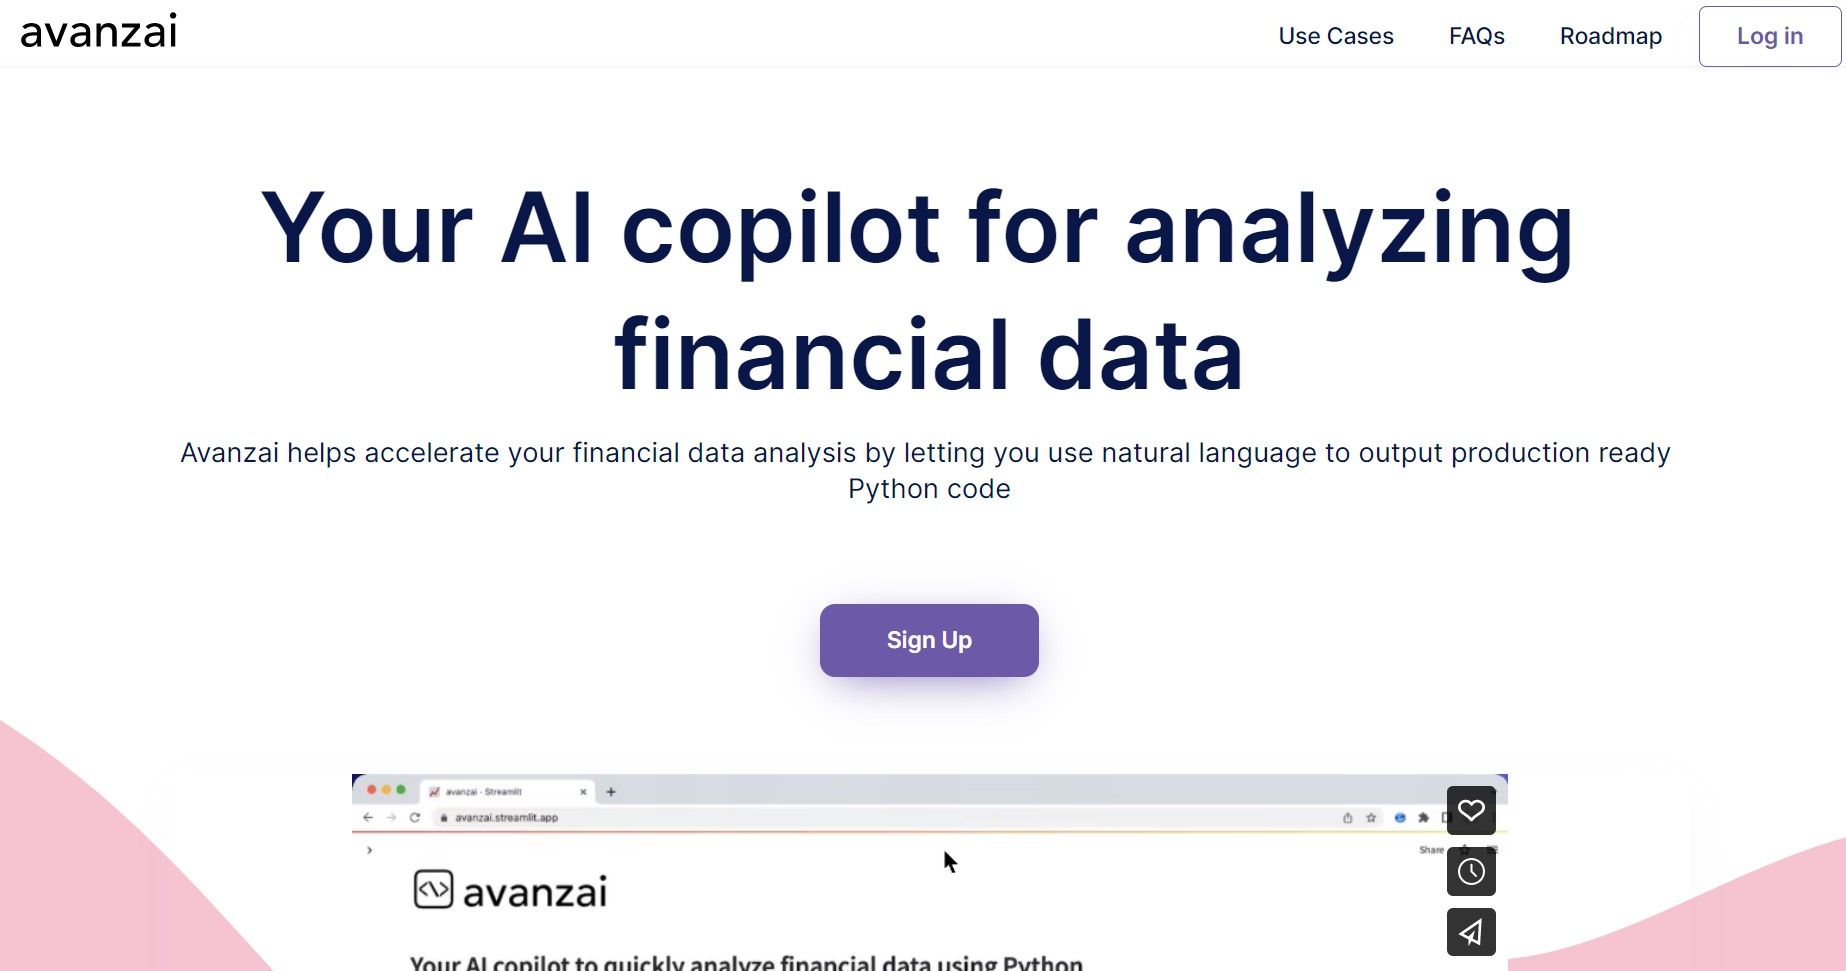  AI copilot for analyzing financial data